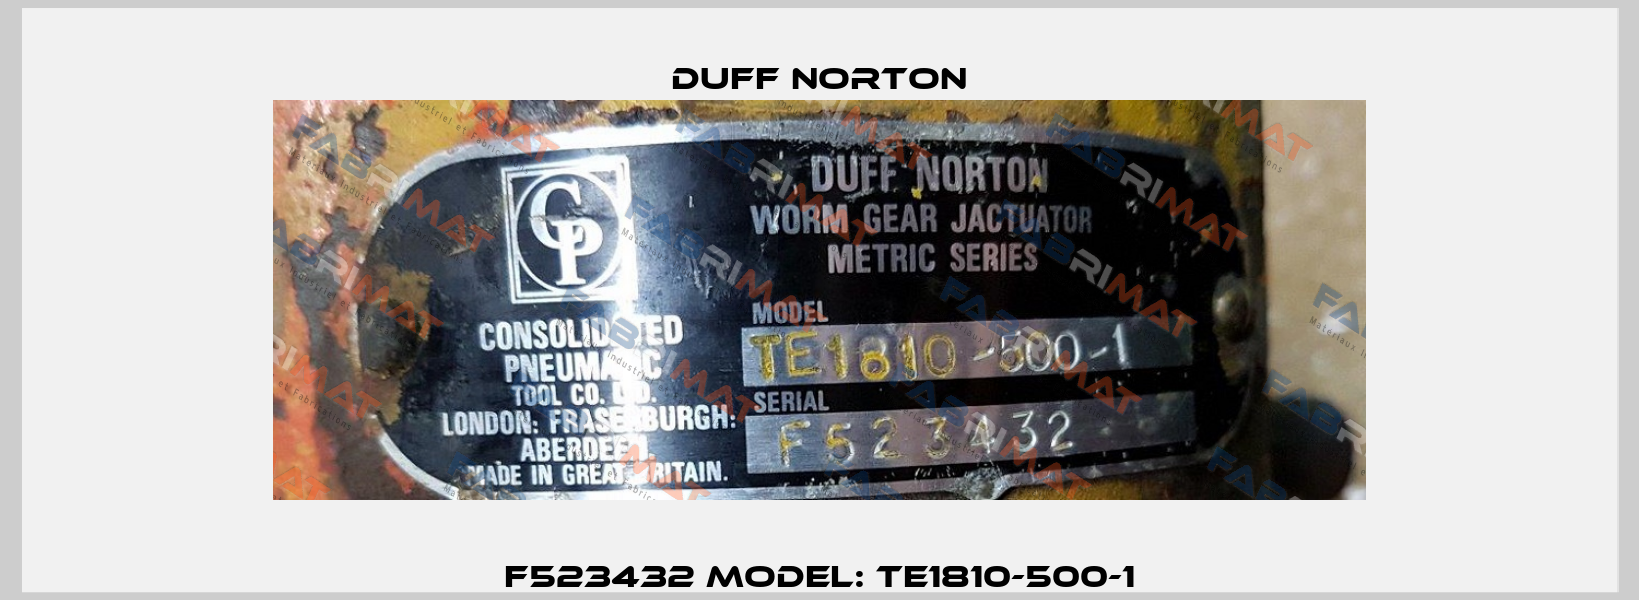 F523432 Model: TE1810-500-1 Duff Norton